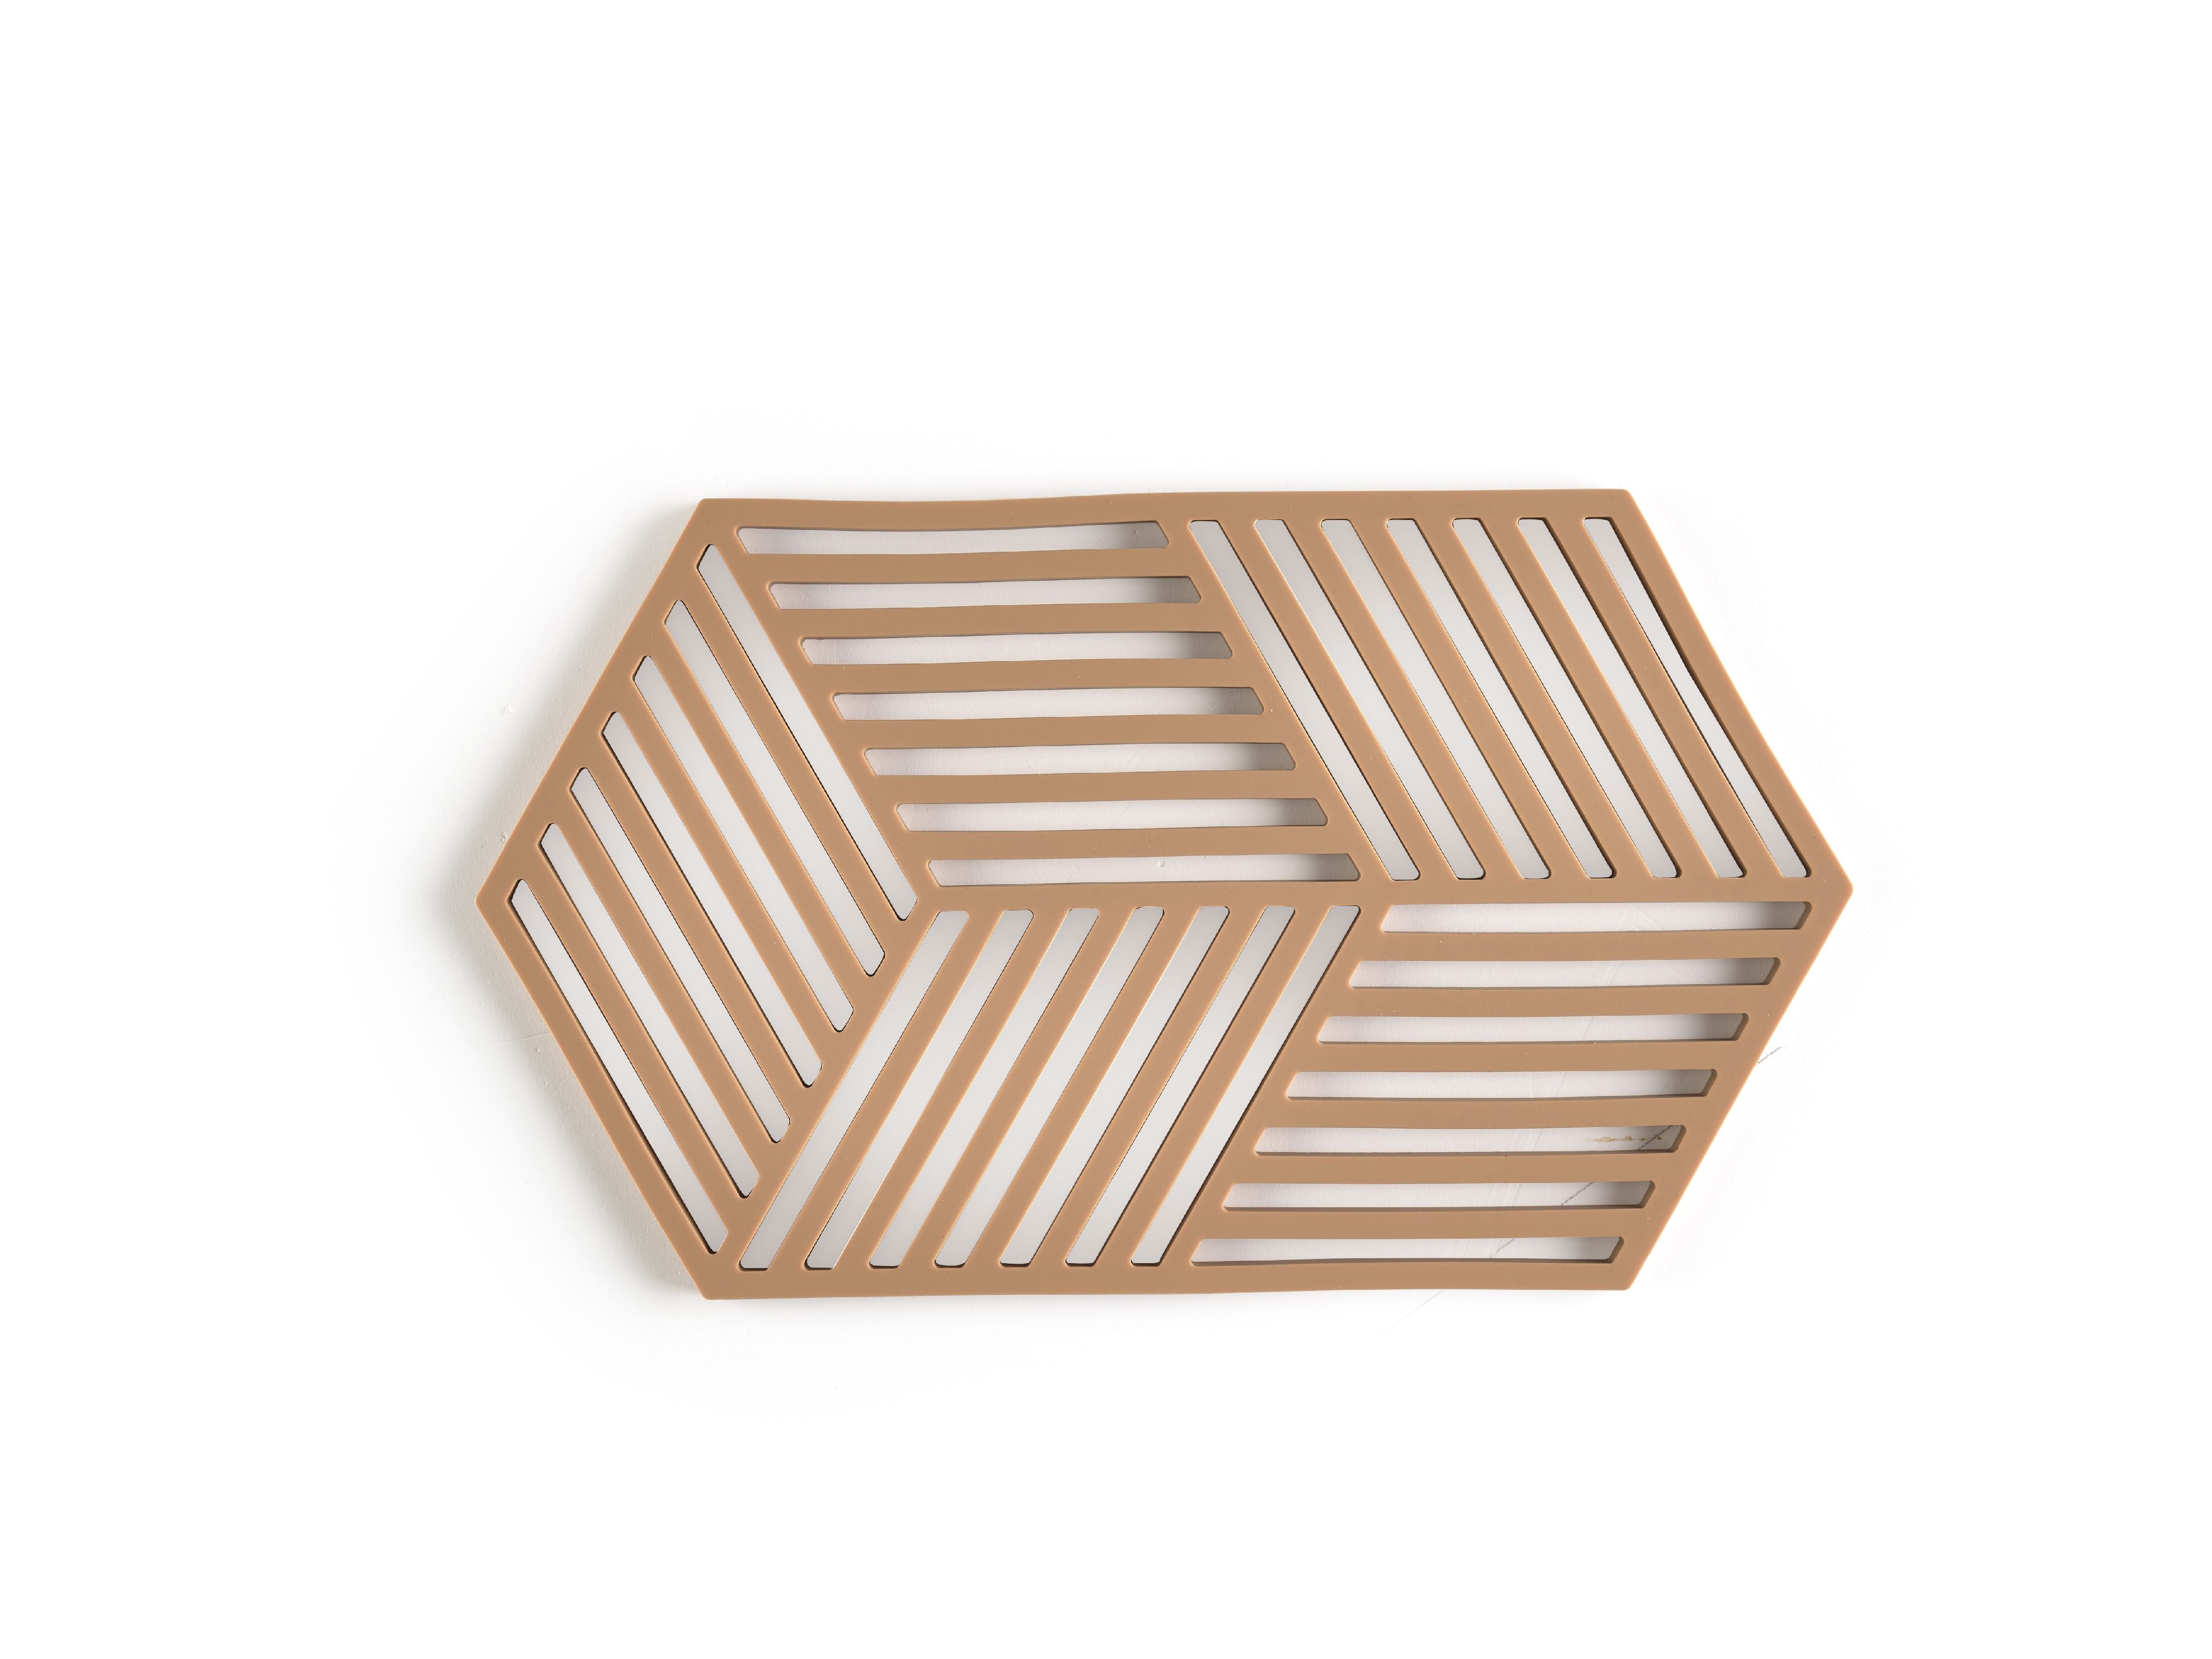 Zone Dänemark Hexagon Trivet 24 x 14 x 0,9 cm, leichte Terrakotta